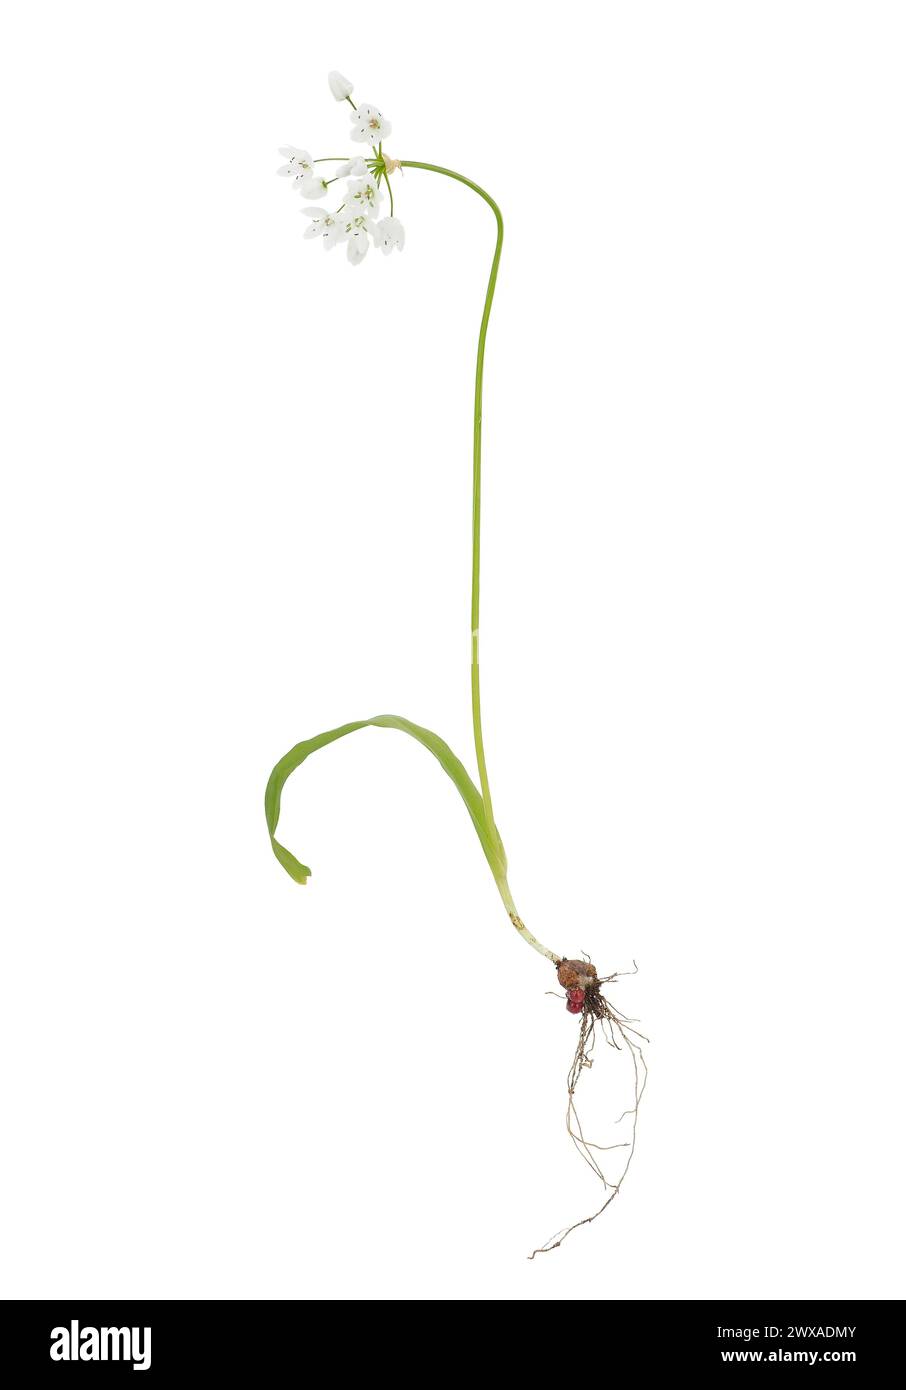 Pianta d'aglio bianca isolata su sfondo bianco, Allium neapolitanum Foto Stock